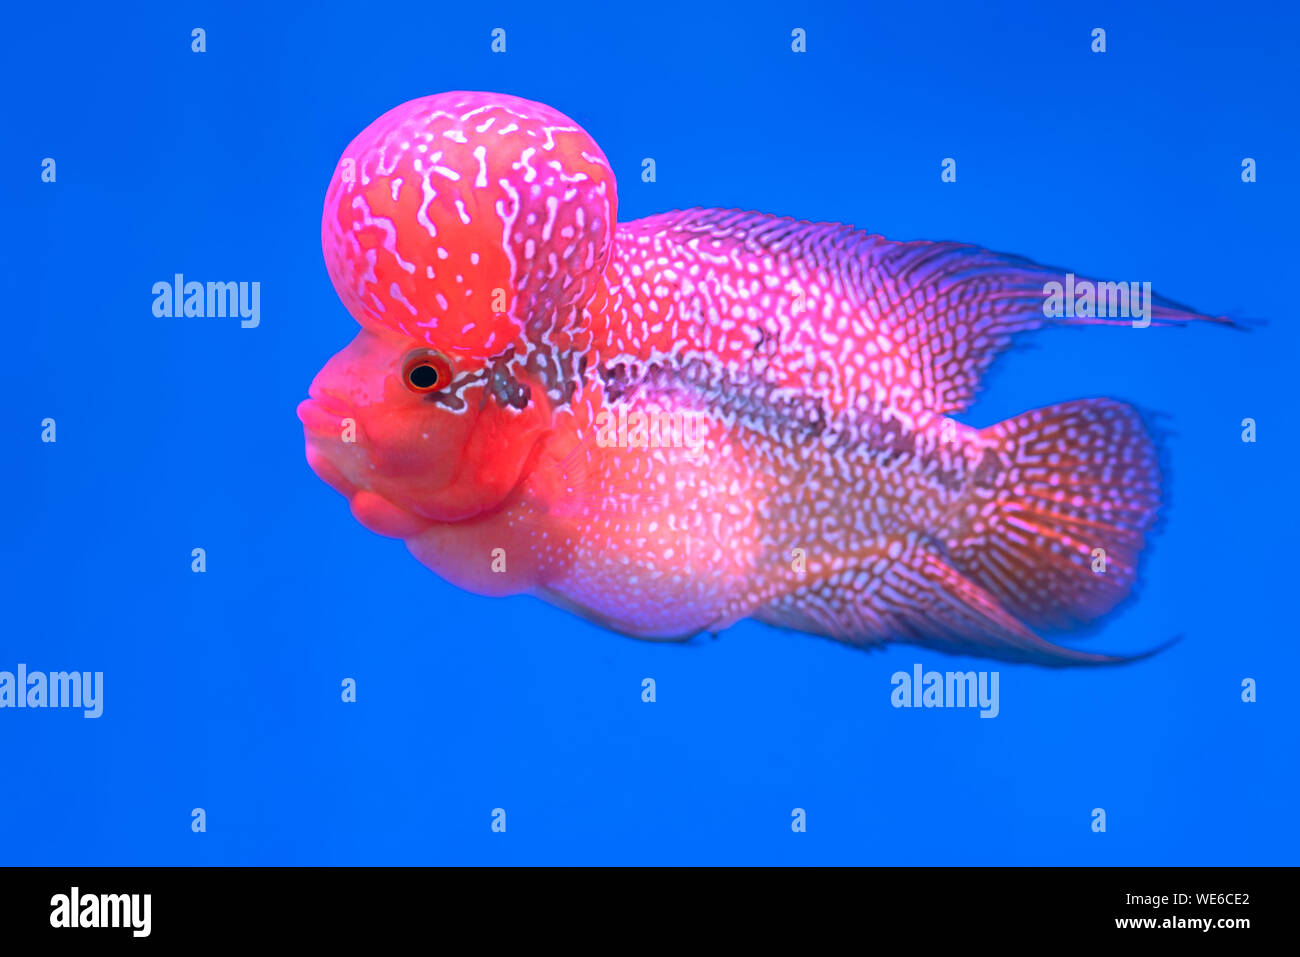 6 Wallpaper Fish Flowerhorn Cichlid Images Stock Photos  Vectors   Shutterstock